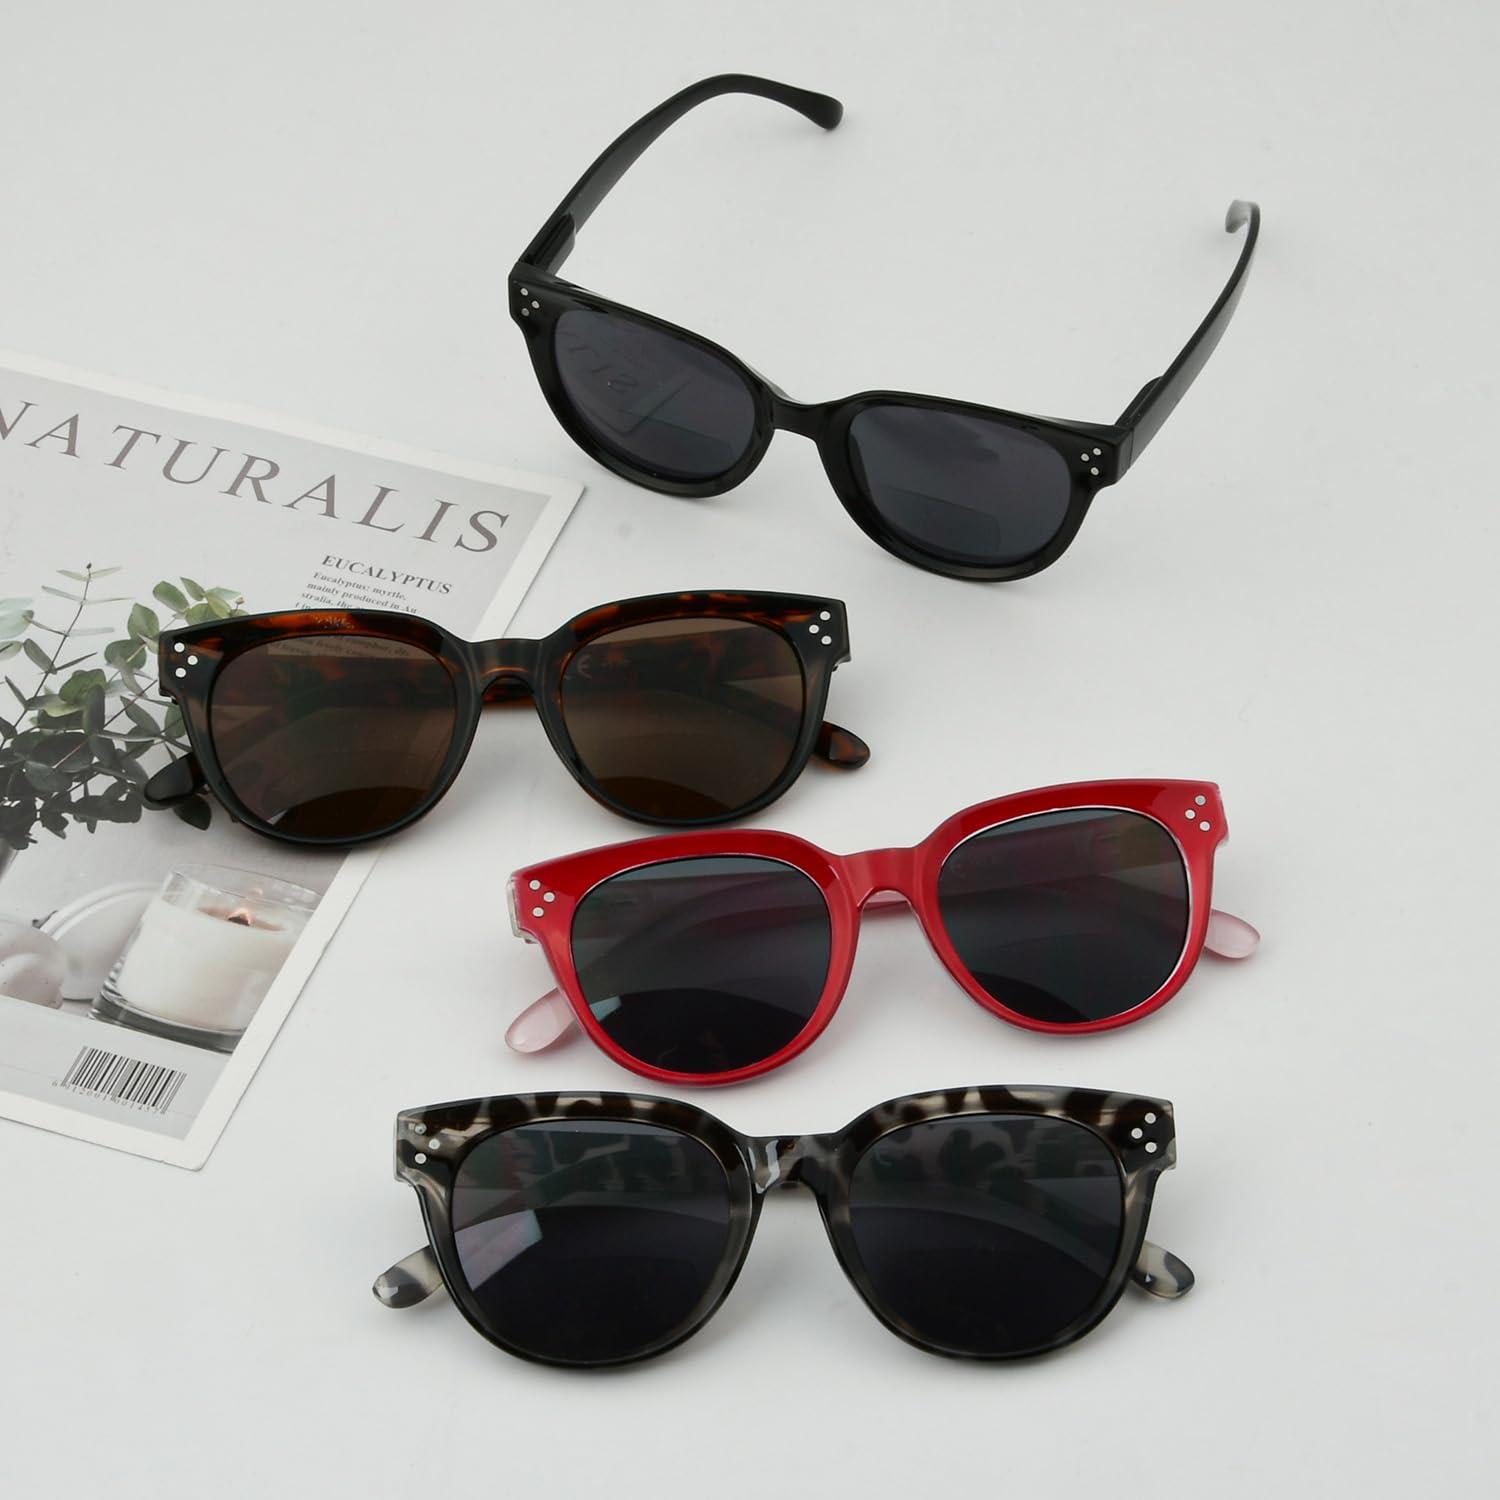 Eyekepper Bifocal Glasses for Women Reading under the Sun Stylish Bifocal Readers Tinted Lens - Red +3.00 3